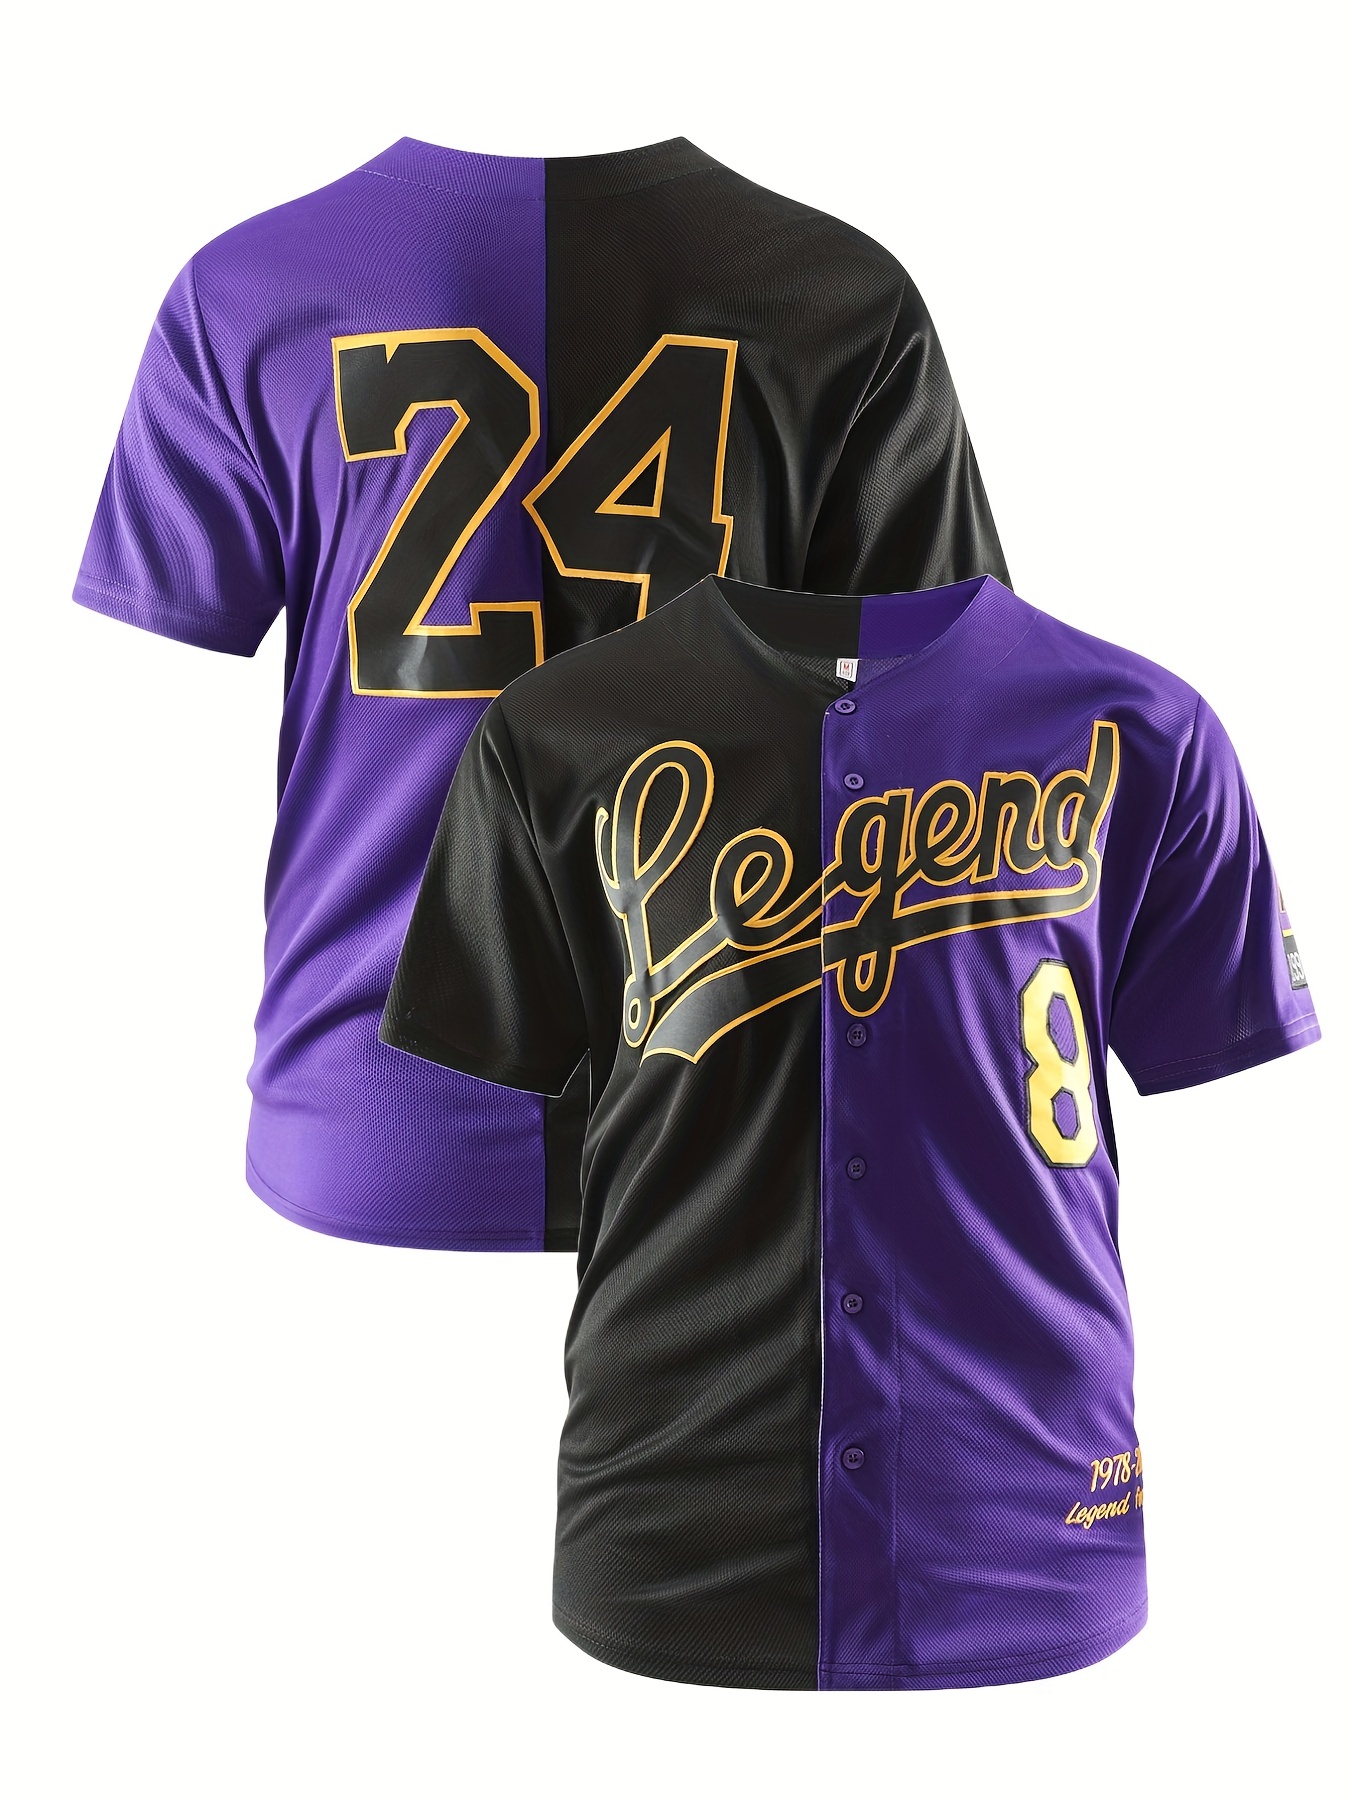 LA Lakers Size 2XL Baseball Jersey Vintage Starter Yellow Purple